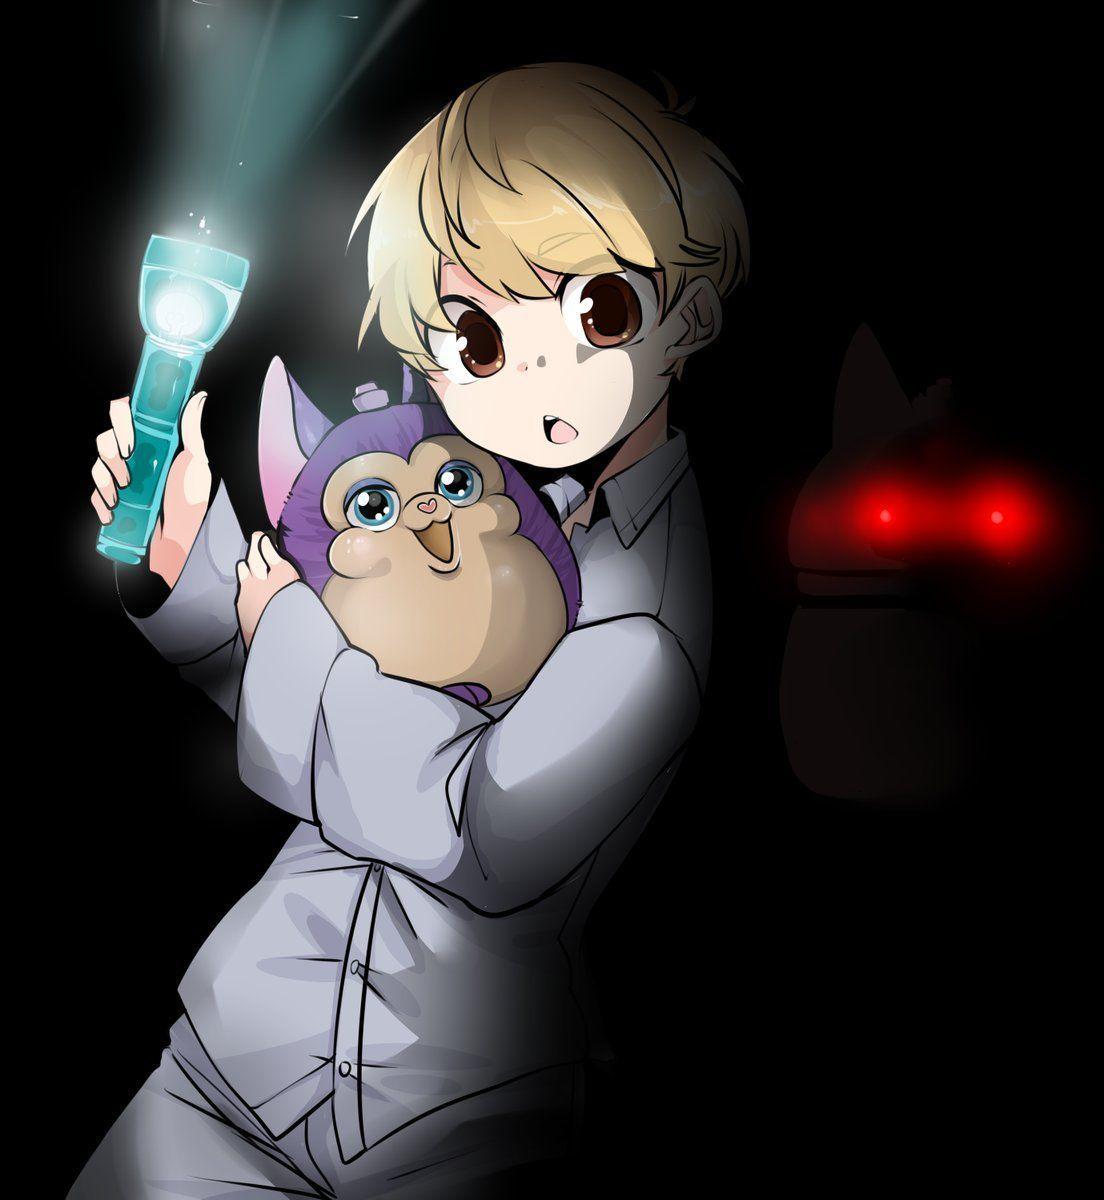 Tattletail anime style art #horrorgame s #furby For more Horror